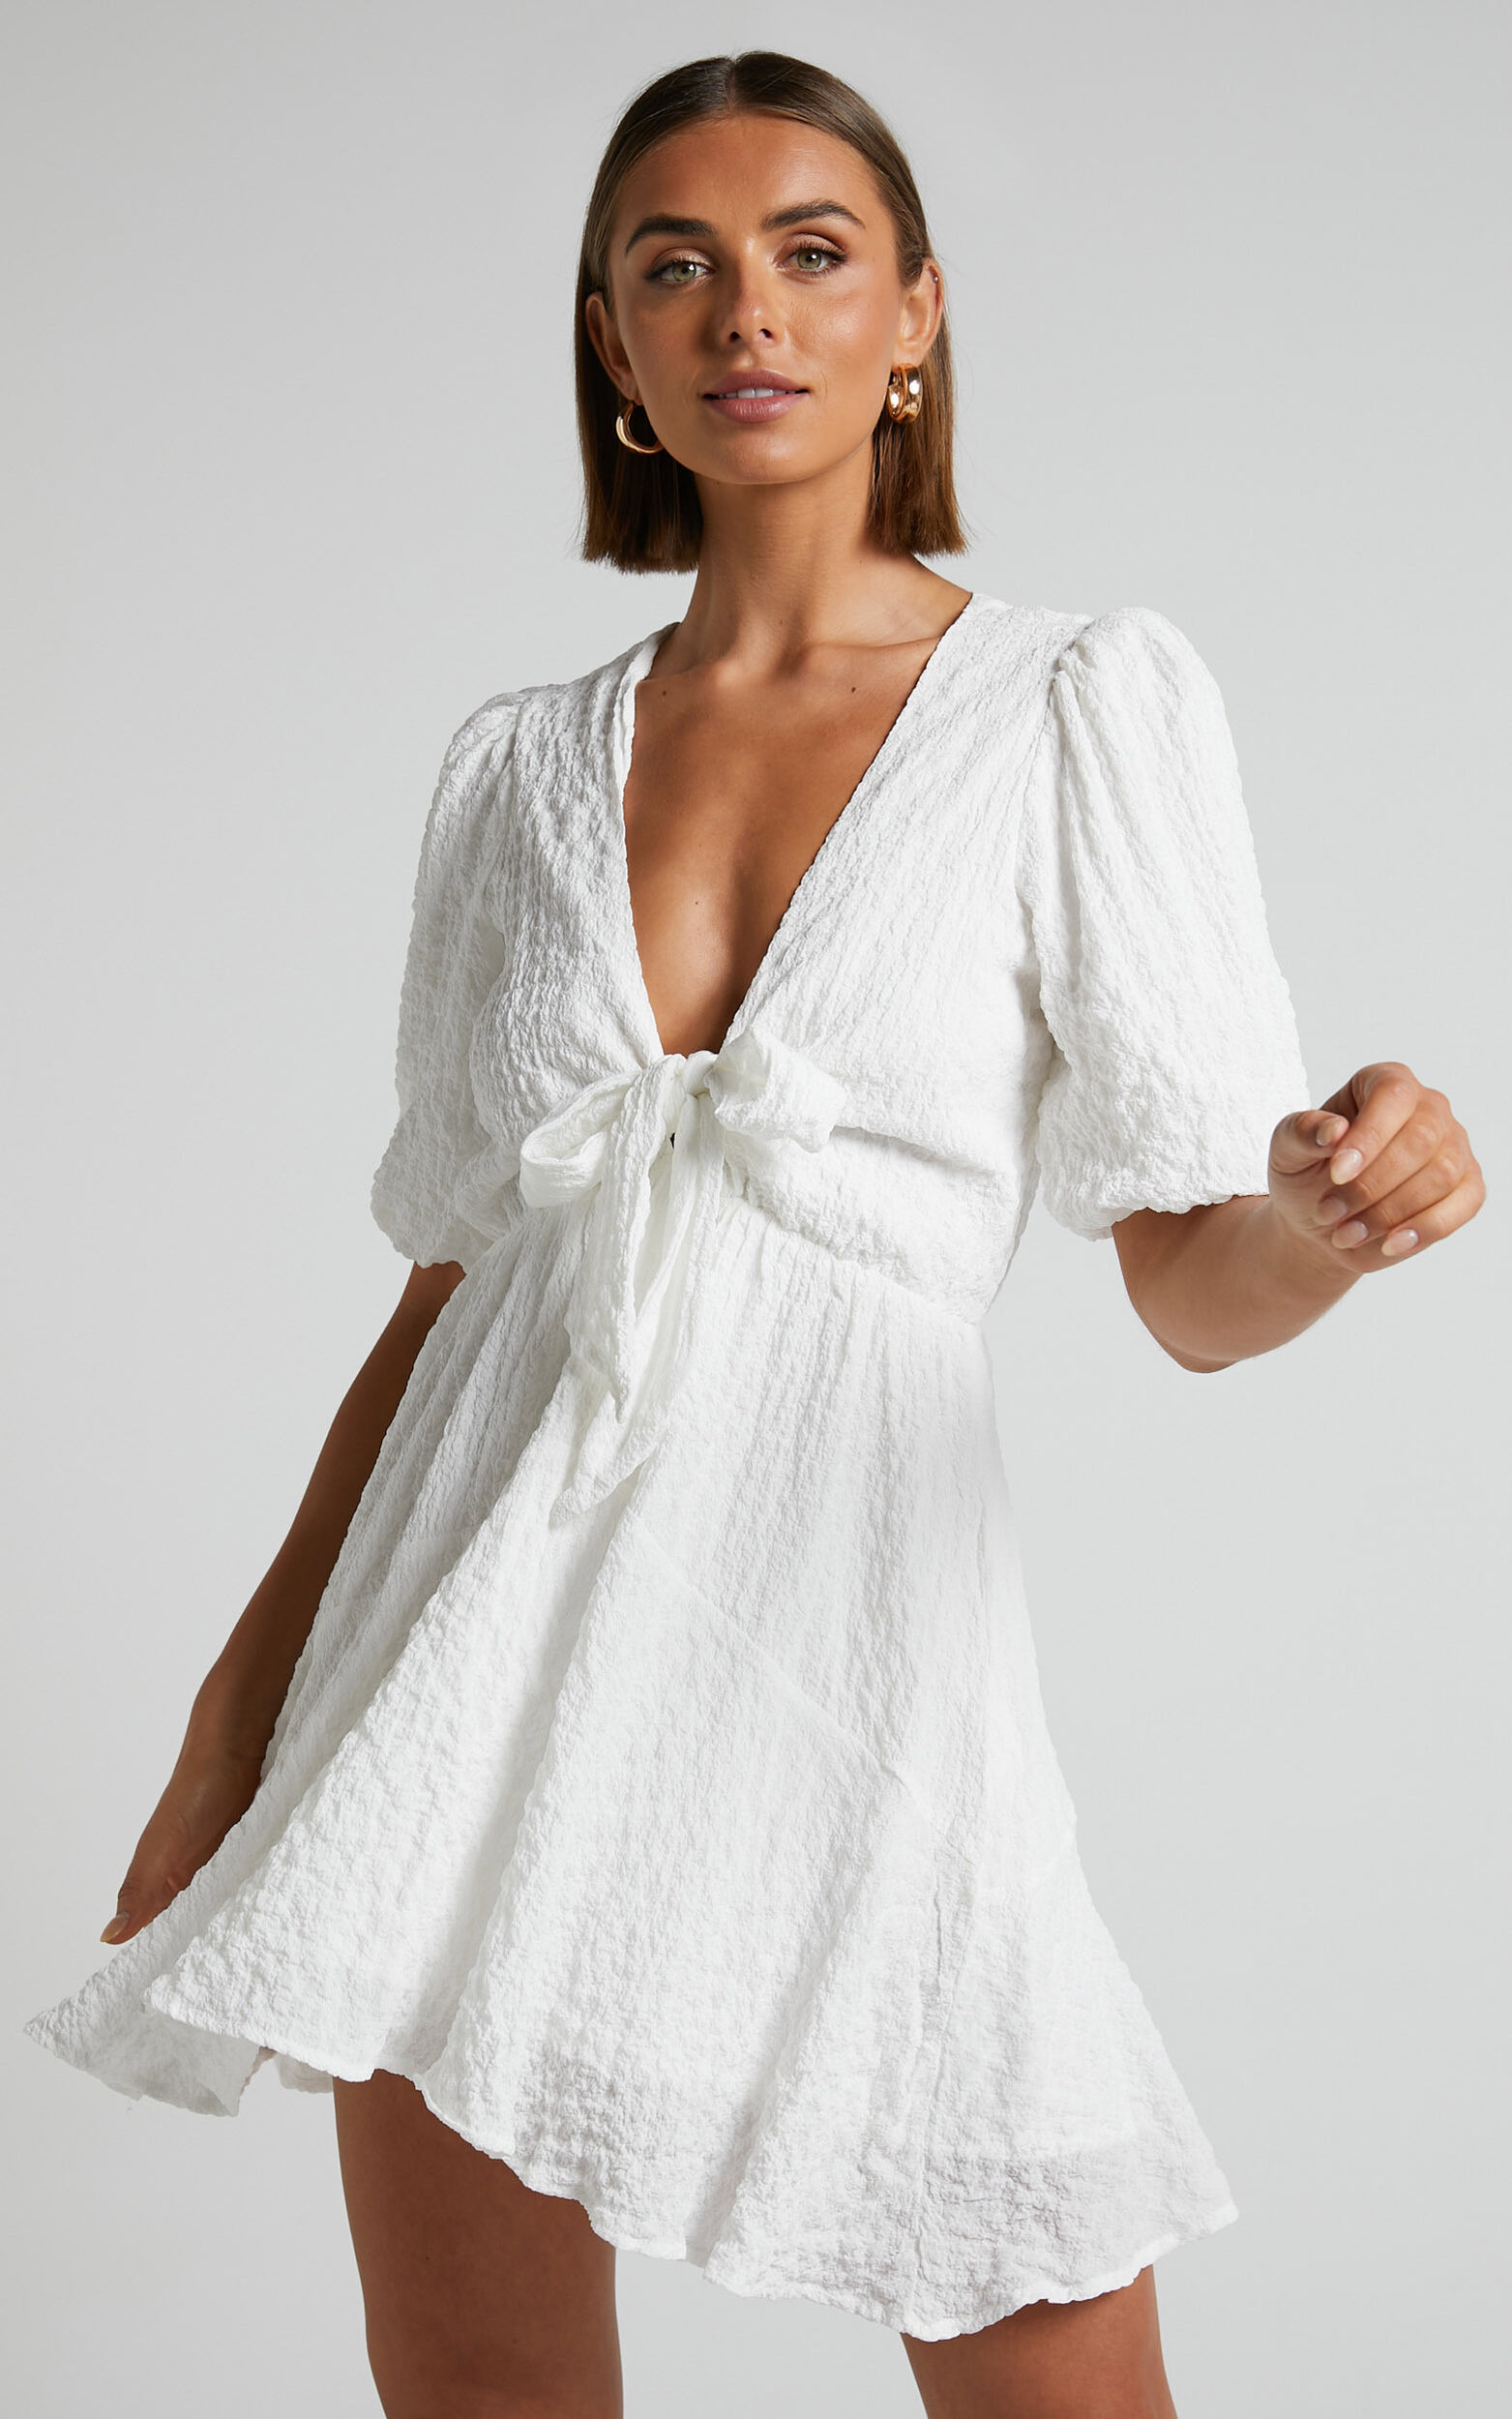 Rosalei Mini Dress - Puff Sleeve Tie Front Dress in White - 04, WHT2